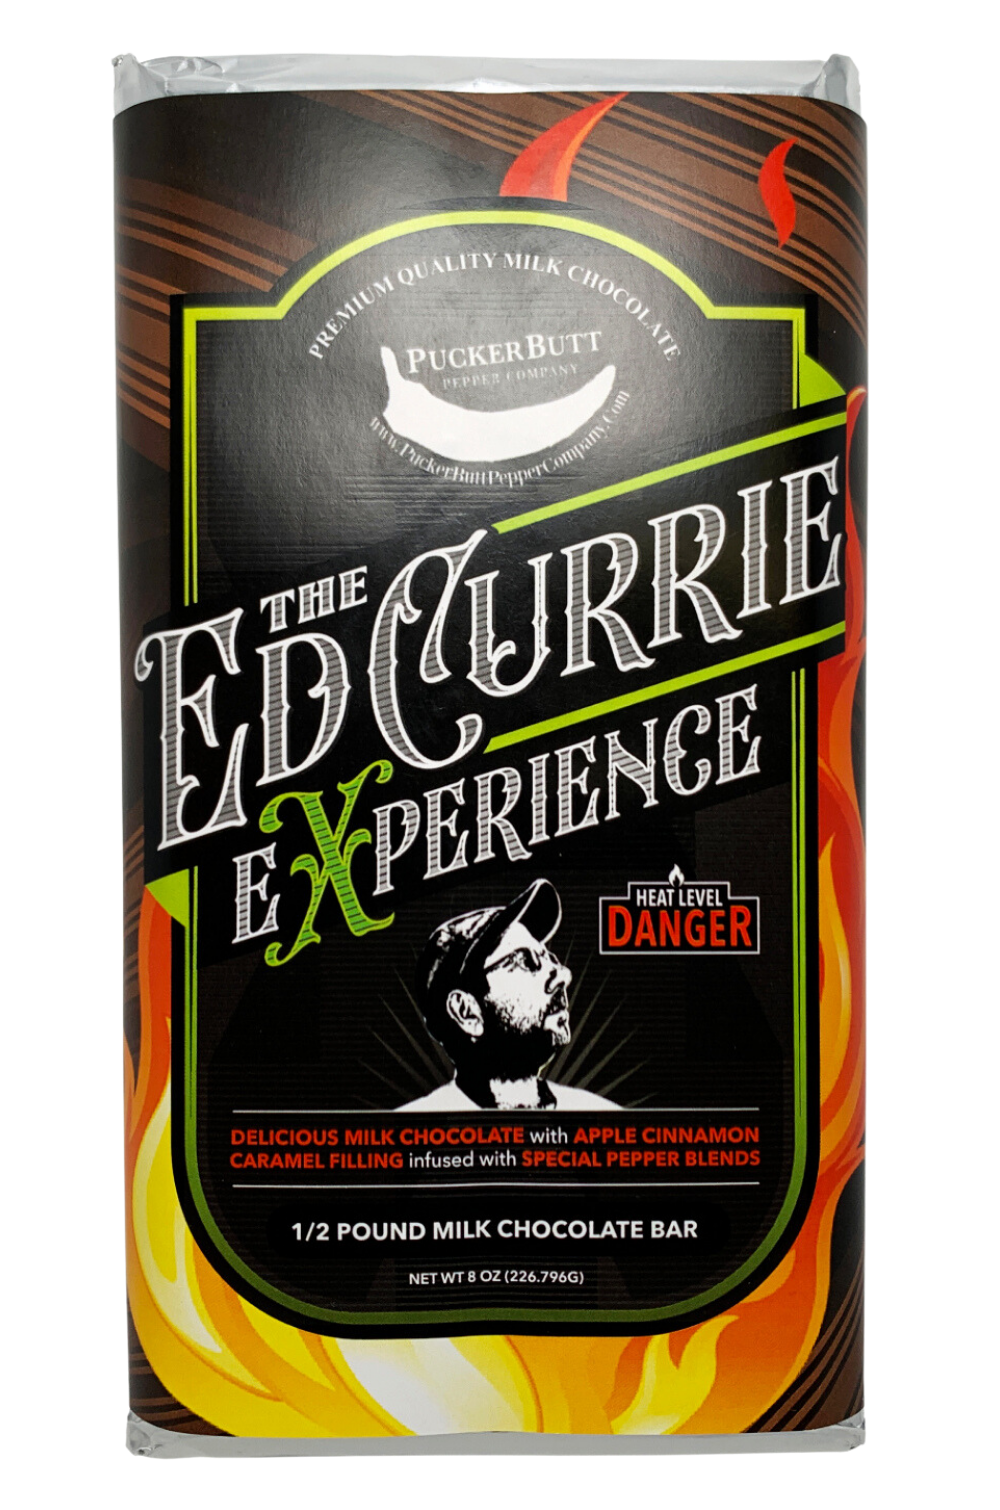 The Ed Currie eXperience Milk Chocolate Bar